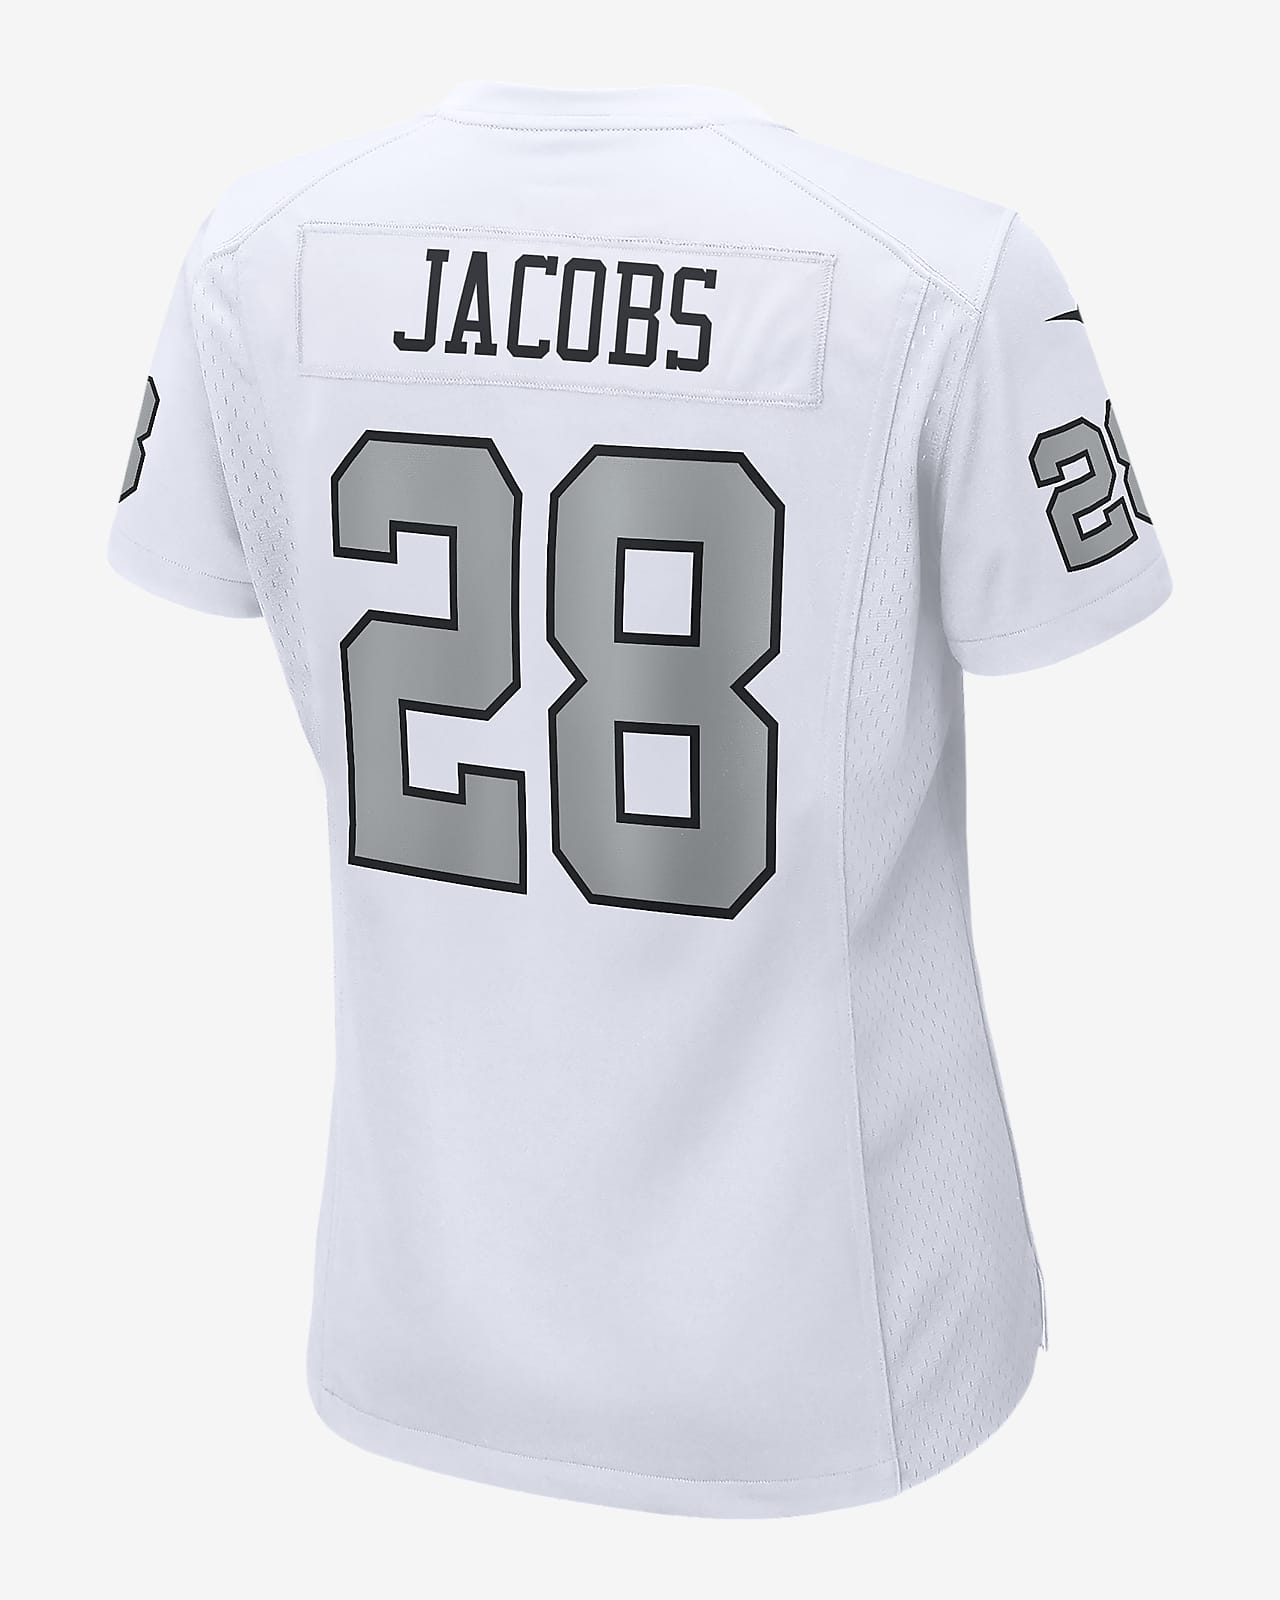 NFL Las Vegas Raiders (Josh Jacobs) Women's Game Football Jersey